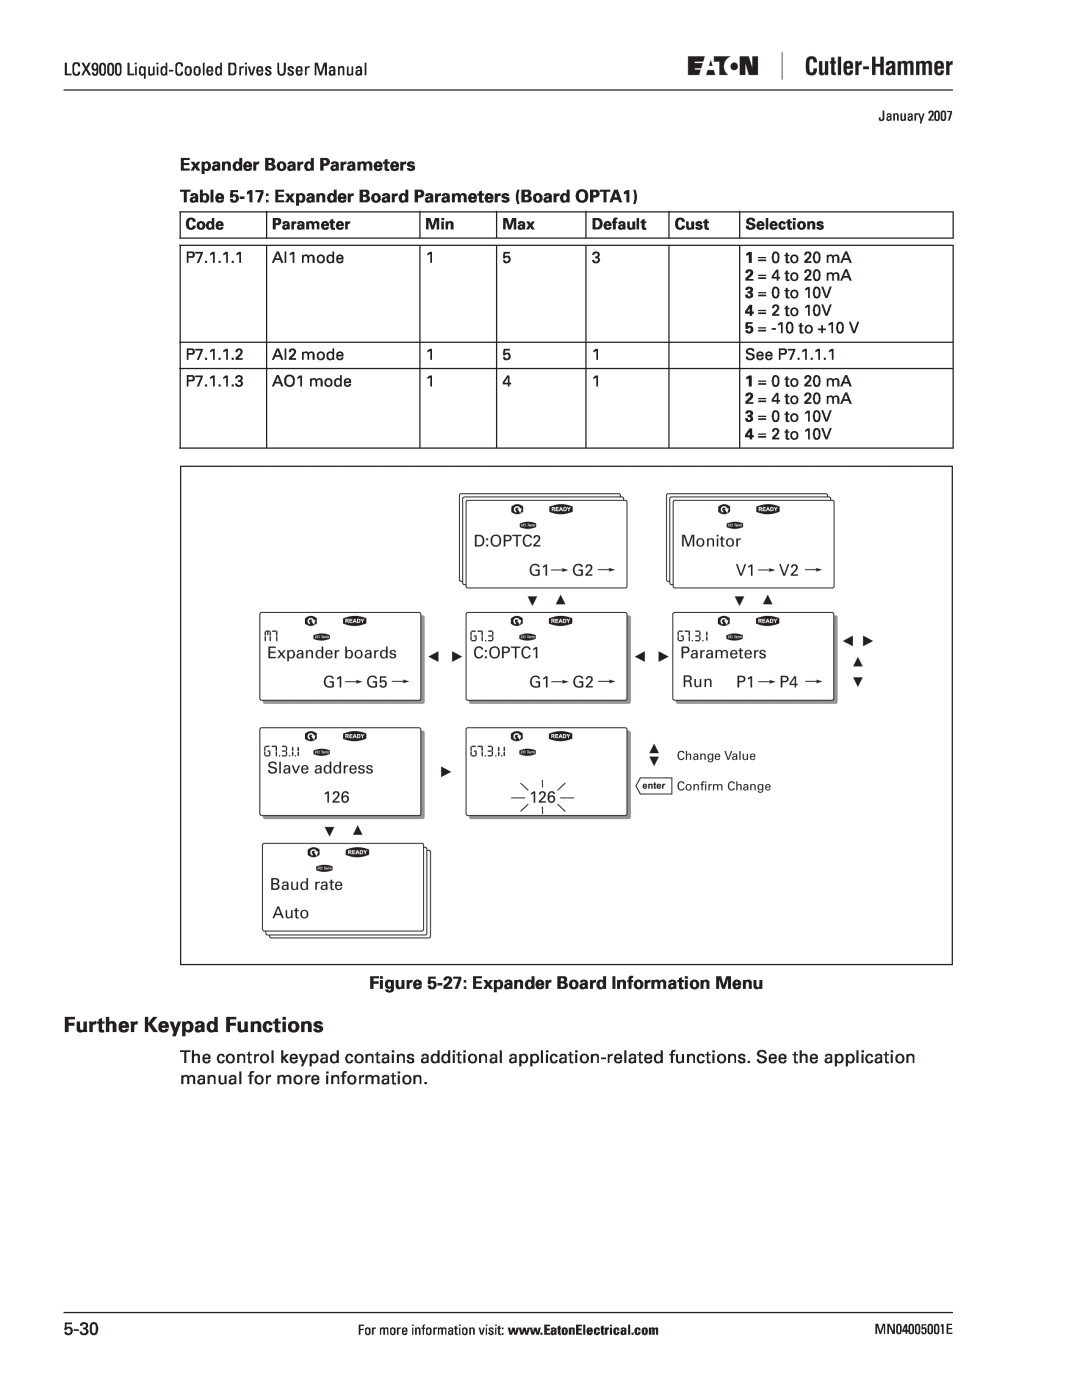 J. T. Eaton LCX9000 user manual Further Keypad Functions, 17 Expander Board Parameters Board OPTA1 